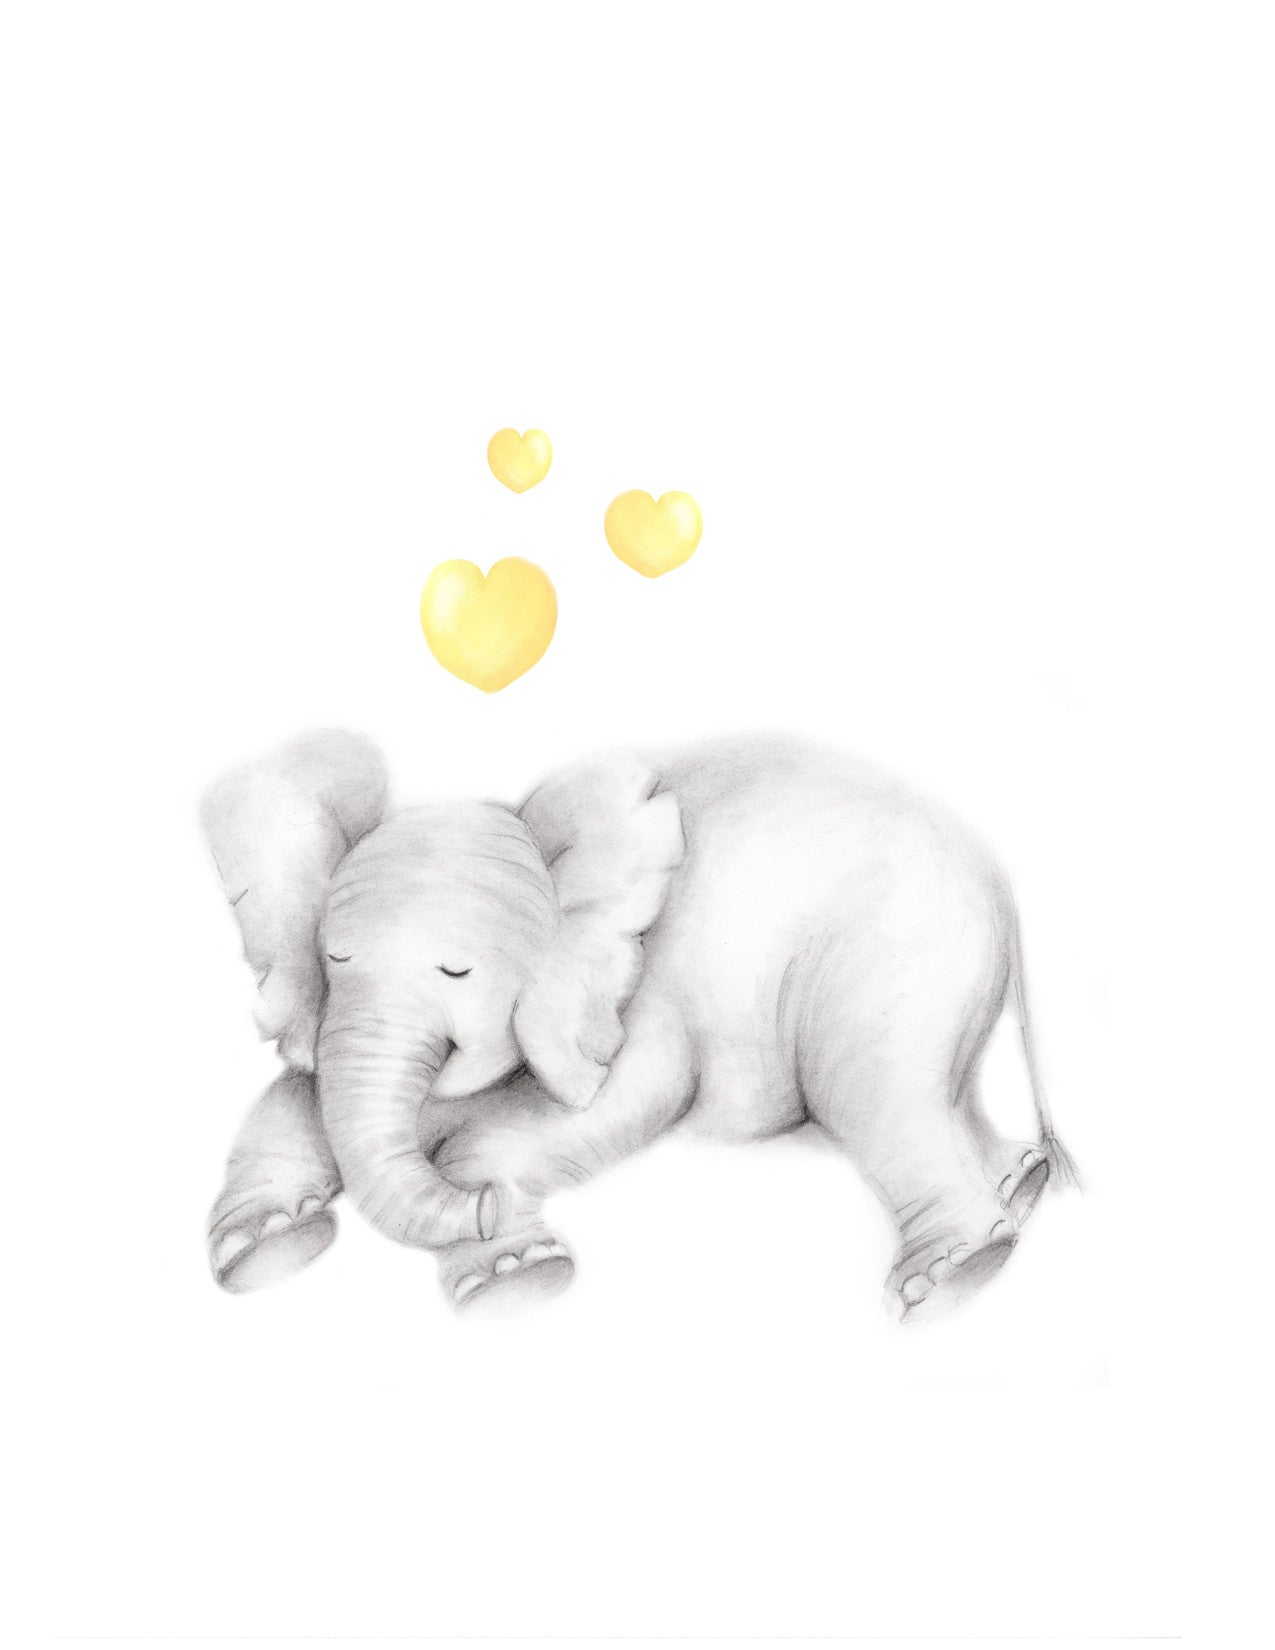 Elephants with Hearts Nursery Art Prints - Set of 3 - Studio Q - Art by Nicky Quartermaine Scott